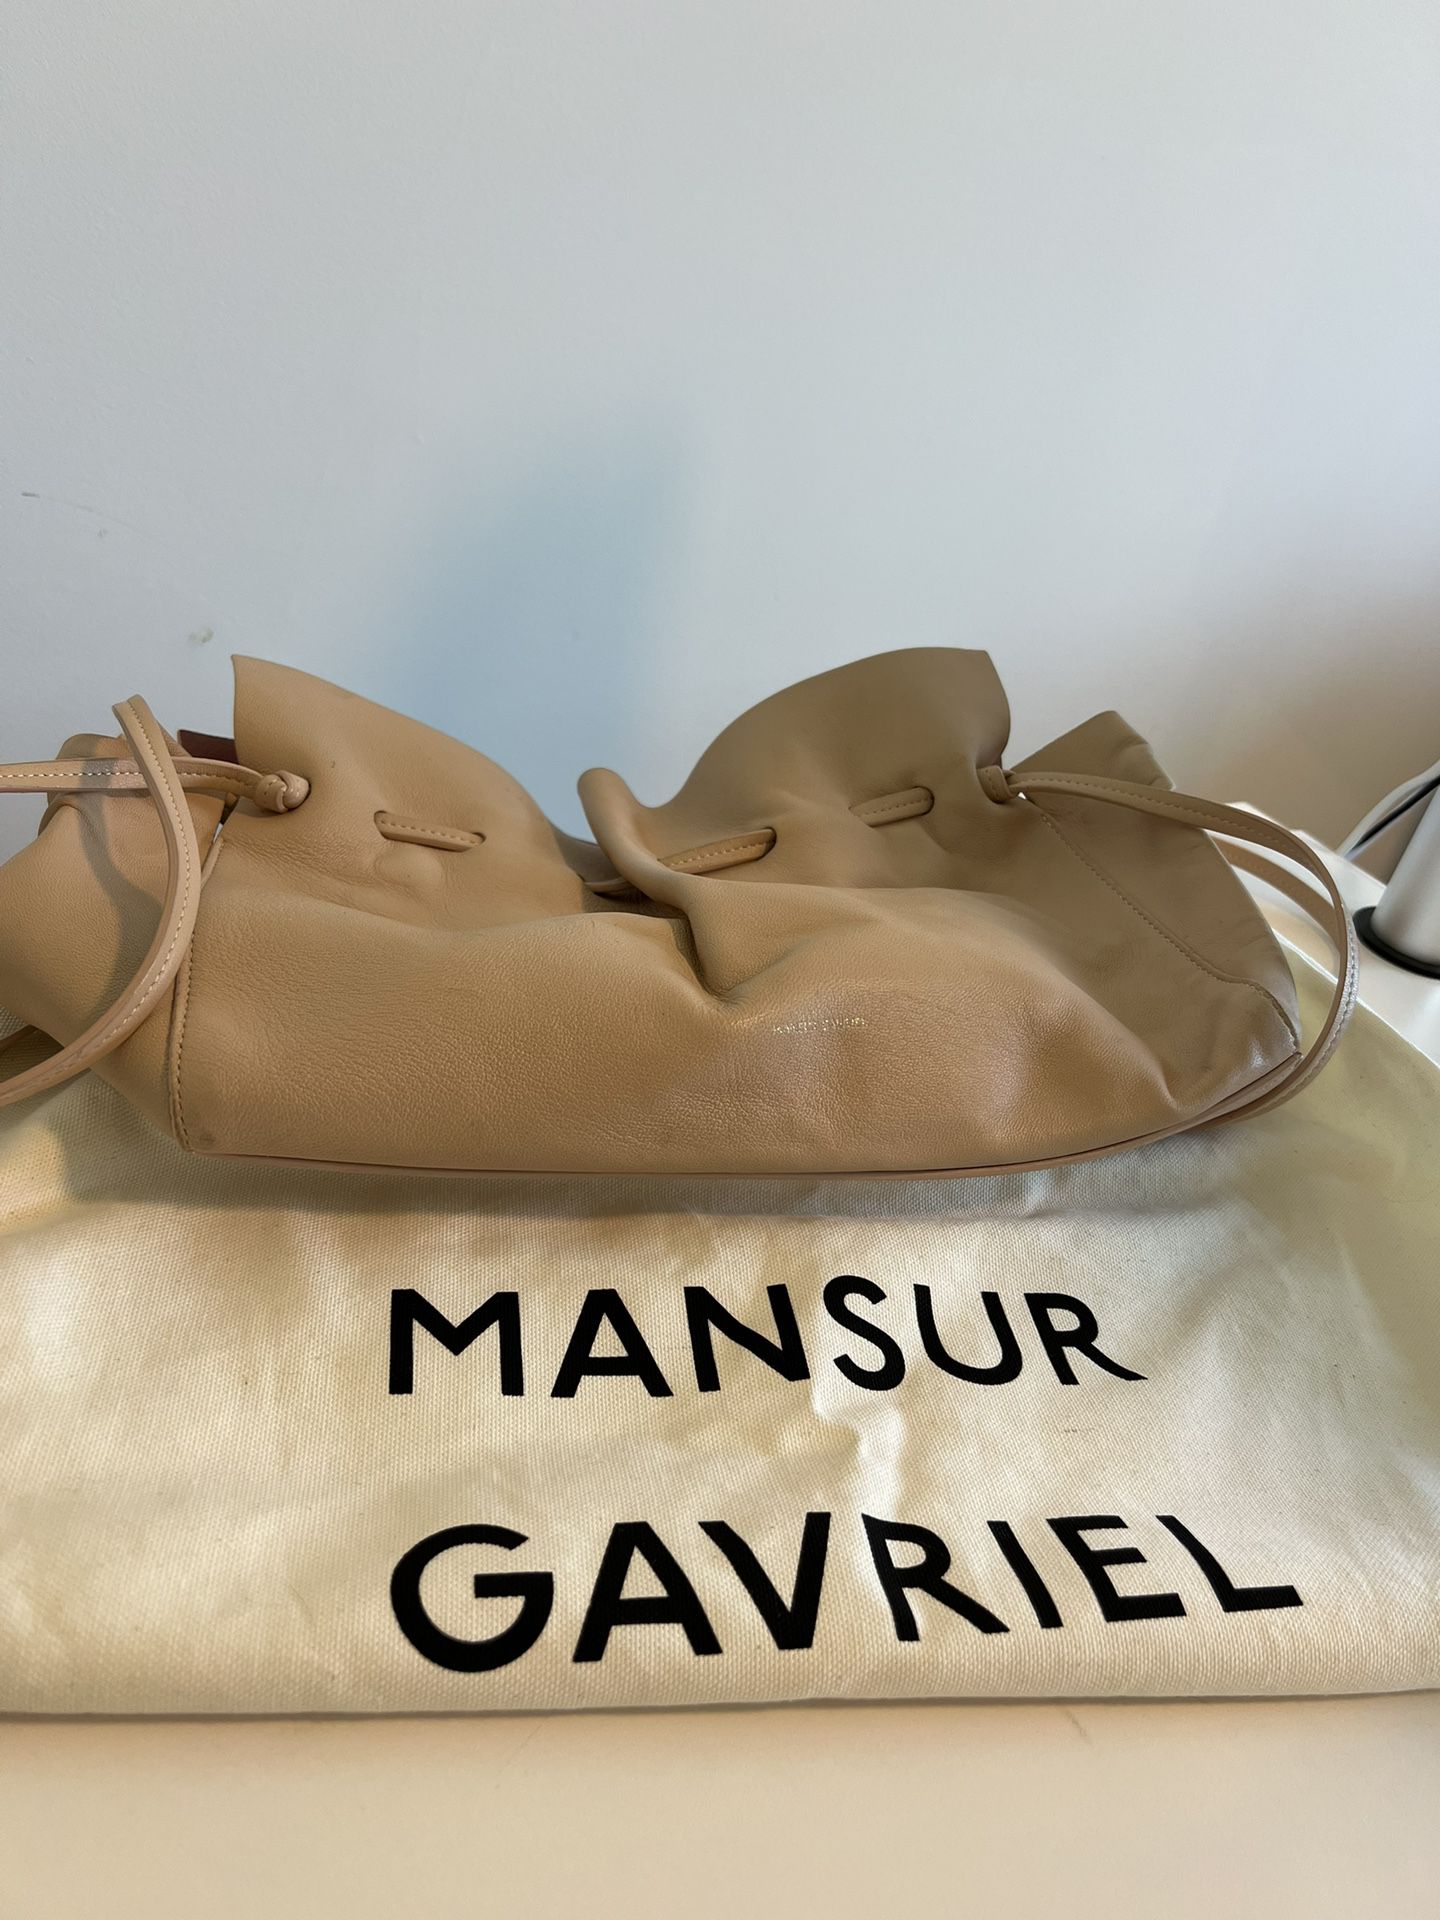 Mansur Gavriel Protea Leather Bucket Bag